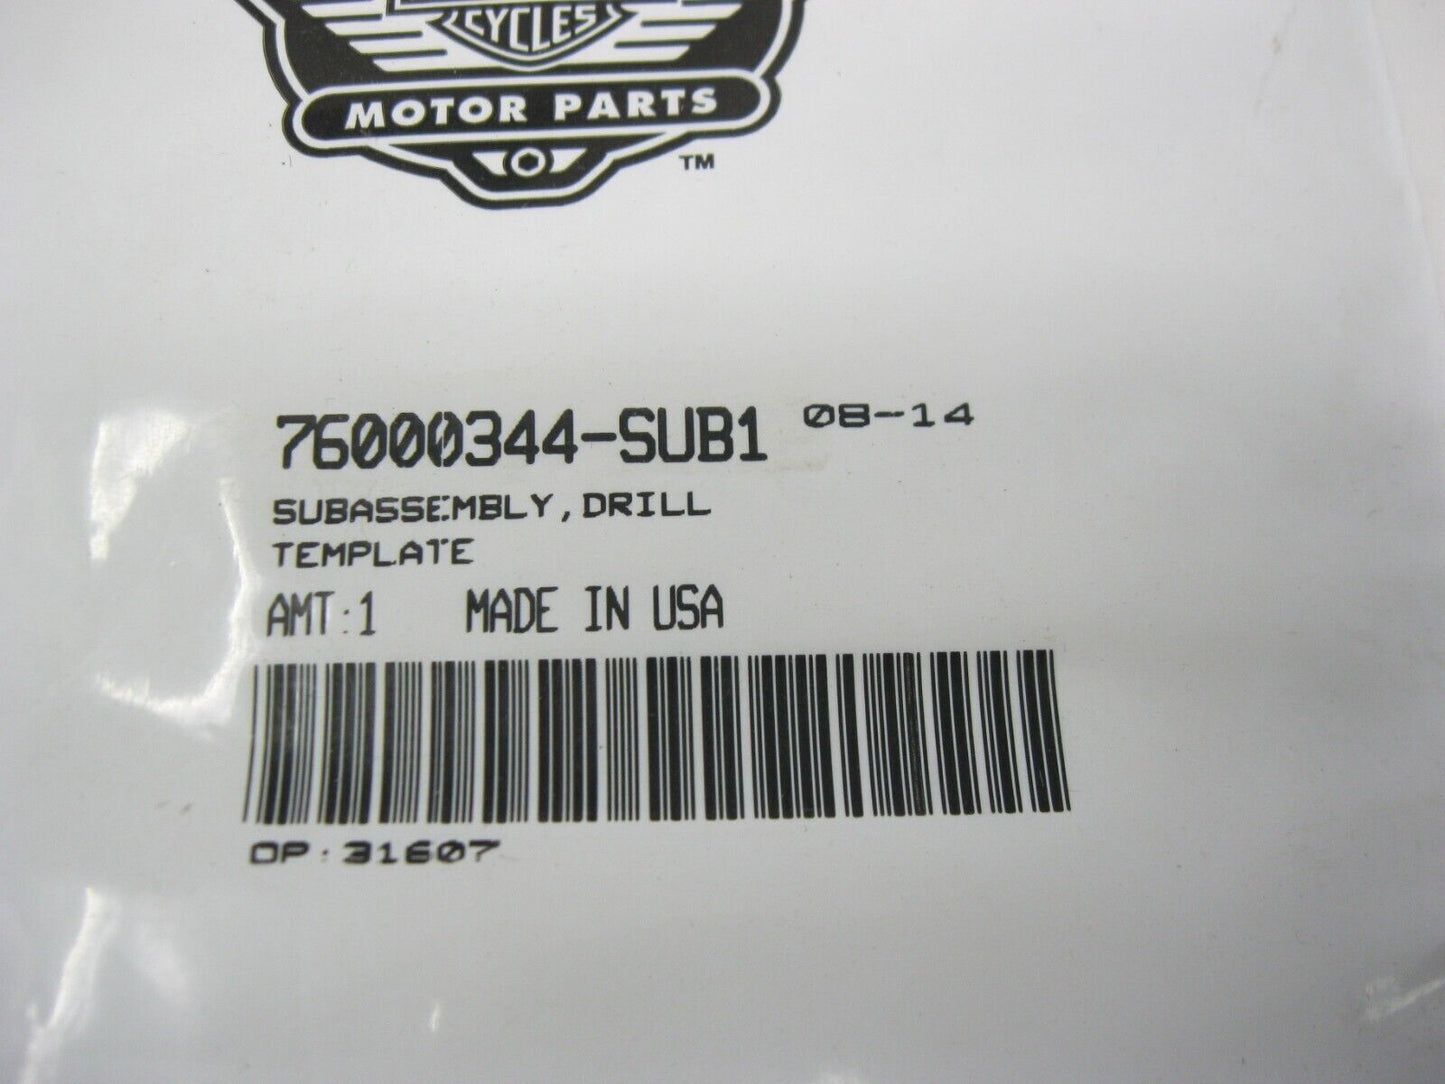 Harley Davidson OEM Subassembly, Drill Template 76000344-Sub1